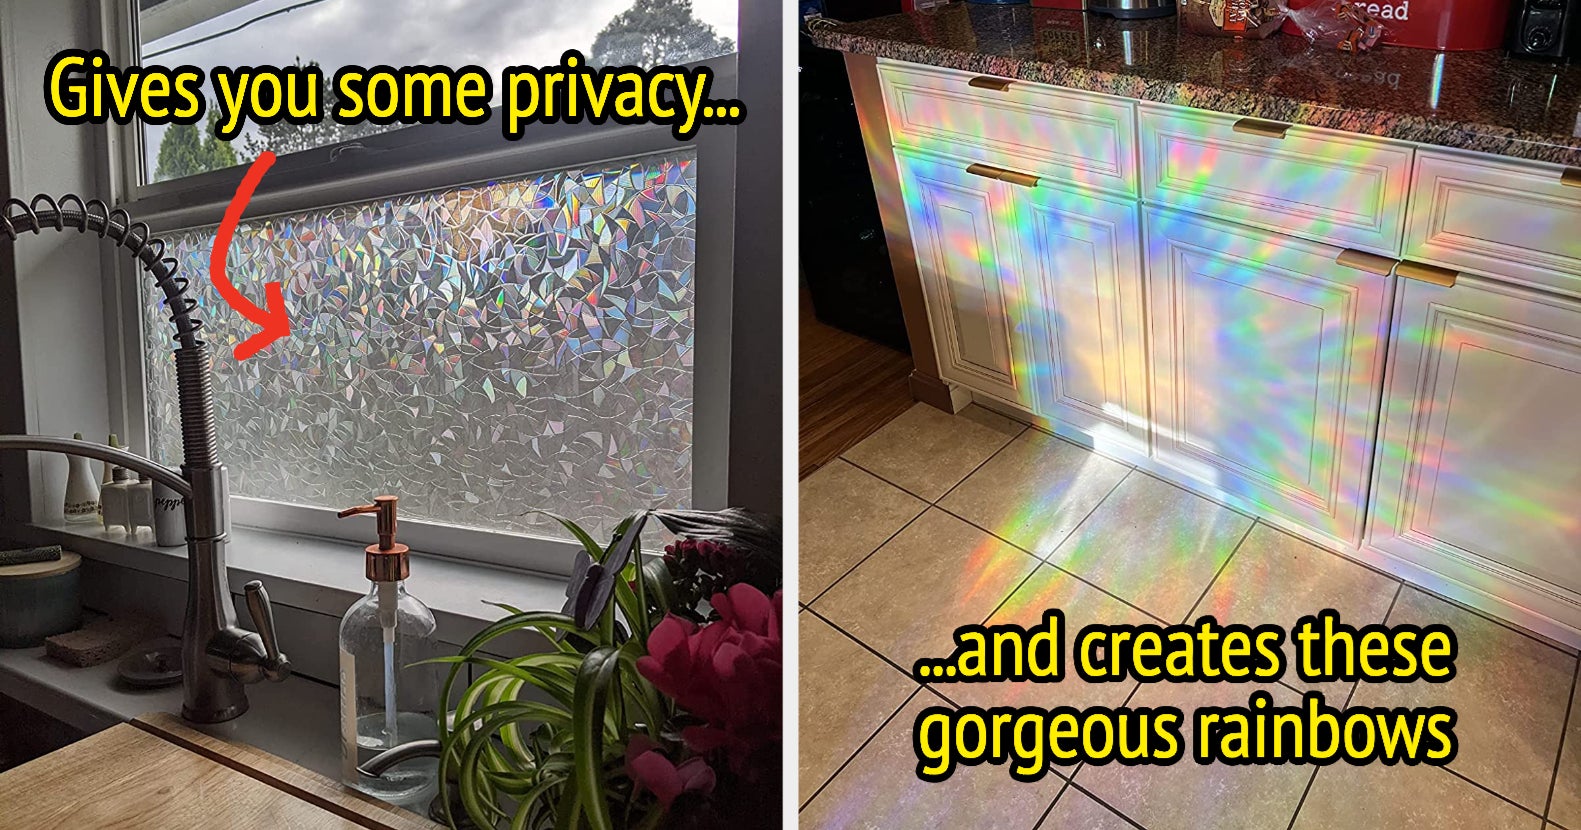 Aldi Is Selling Shiny Rainbow Utensils To Brighten Up The Kitchen